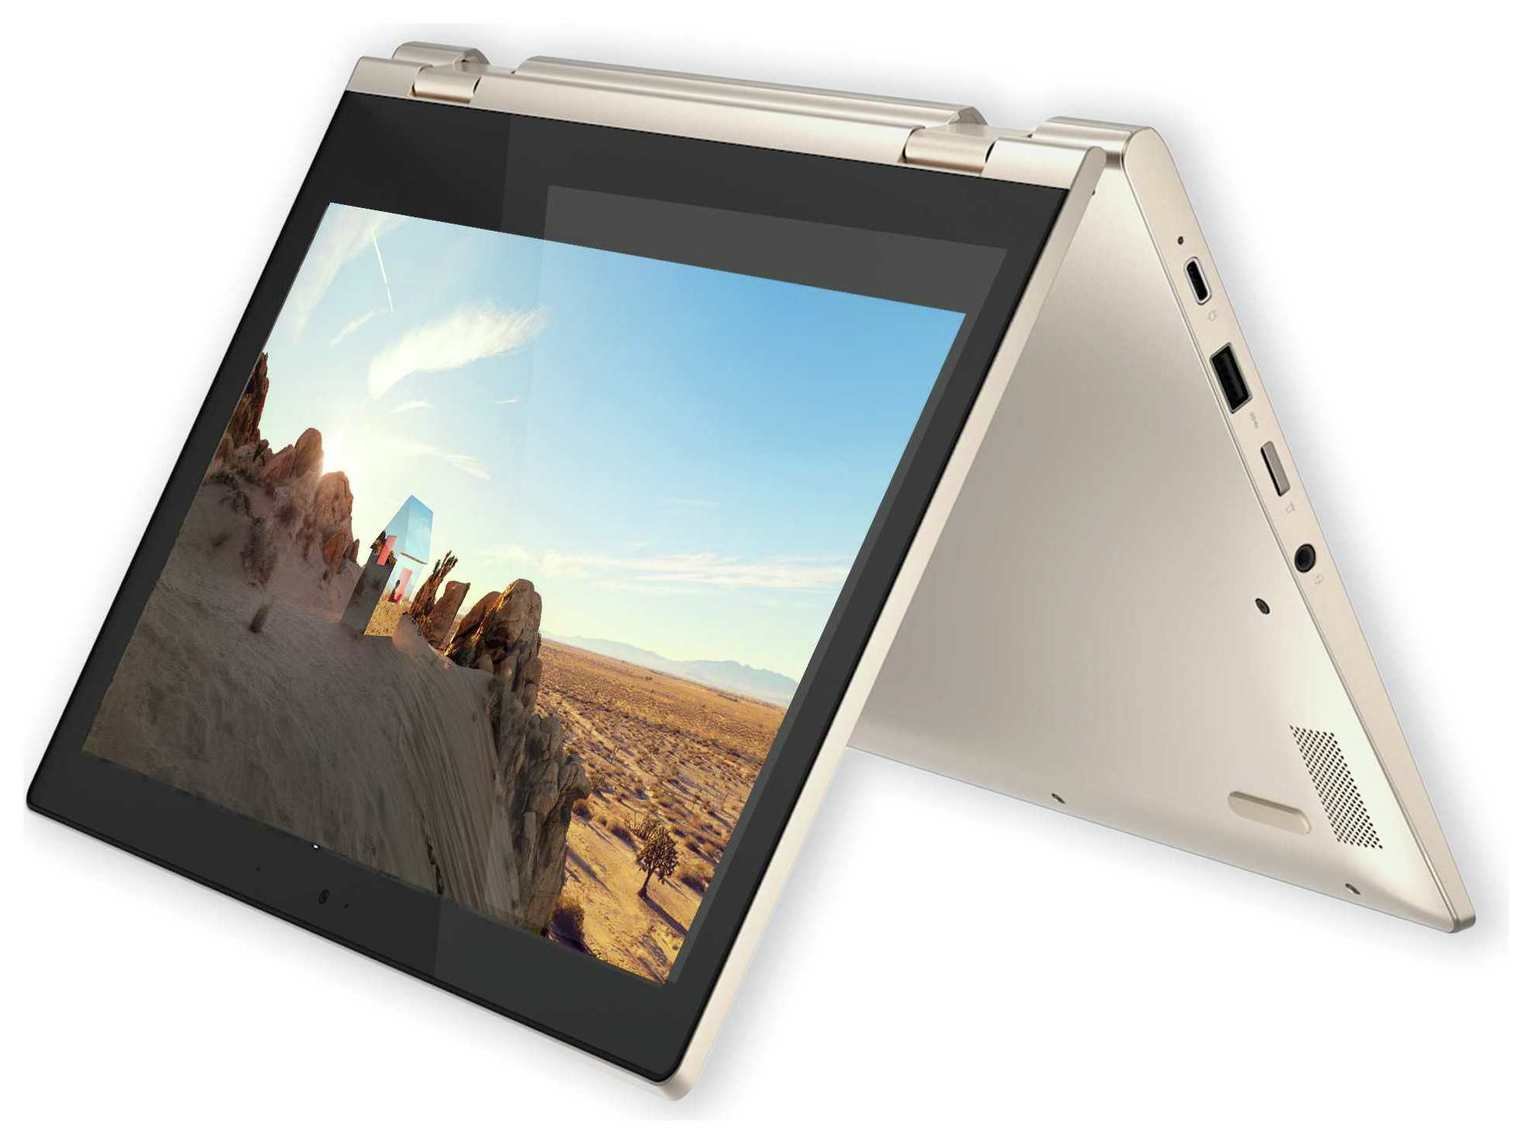 Lenovo IdeaPad Flex 3 11.6in Celeron 4GB 64GB Chromebook Review